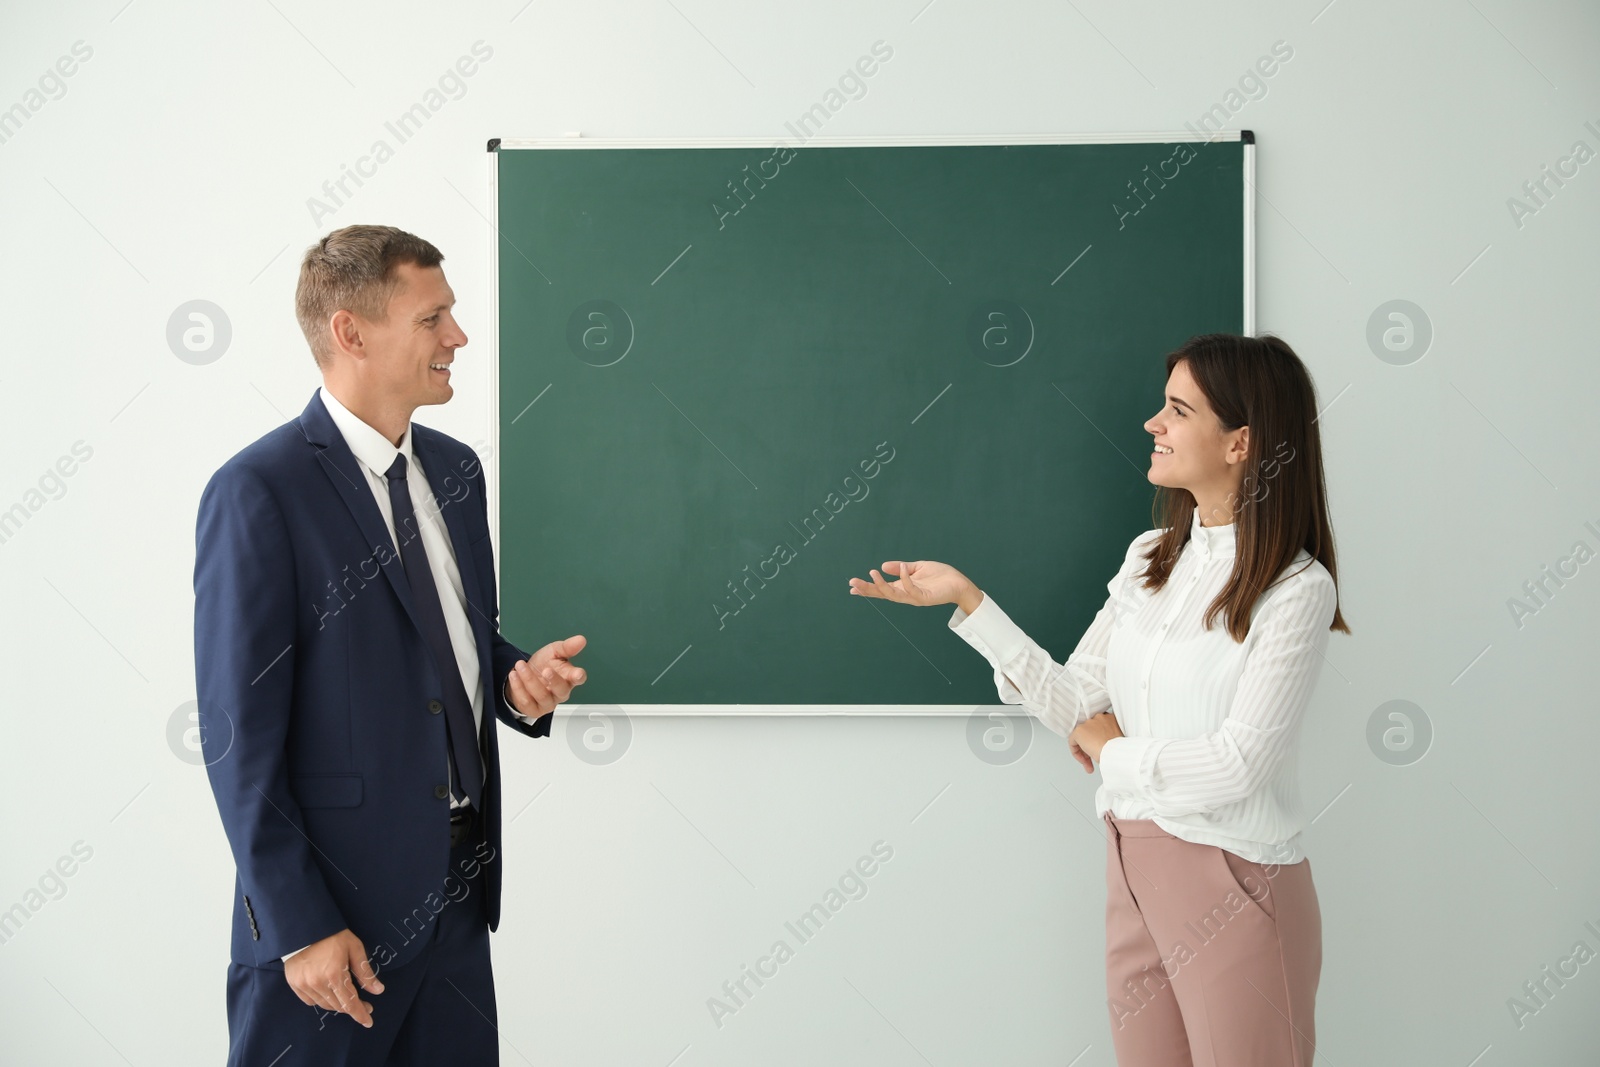 Photo of Man and woman talking near green chalkboard in classroom